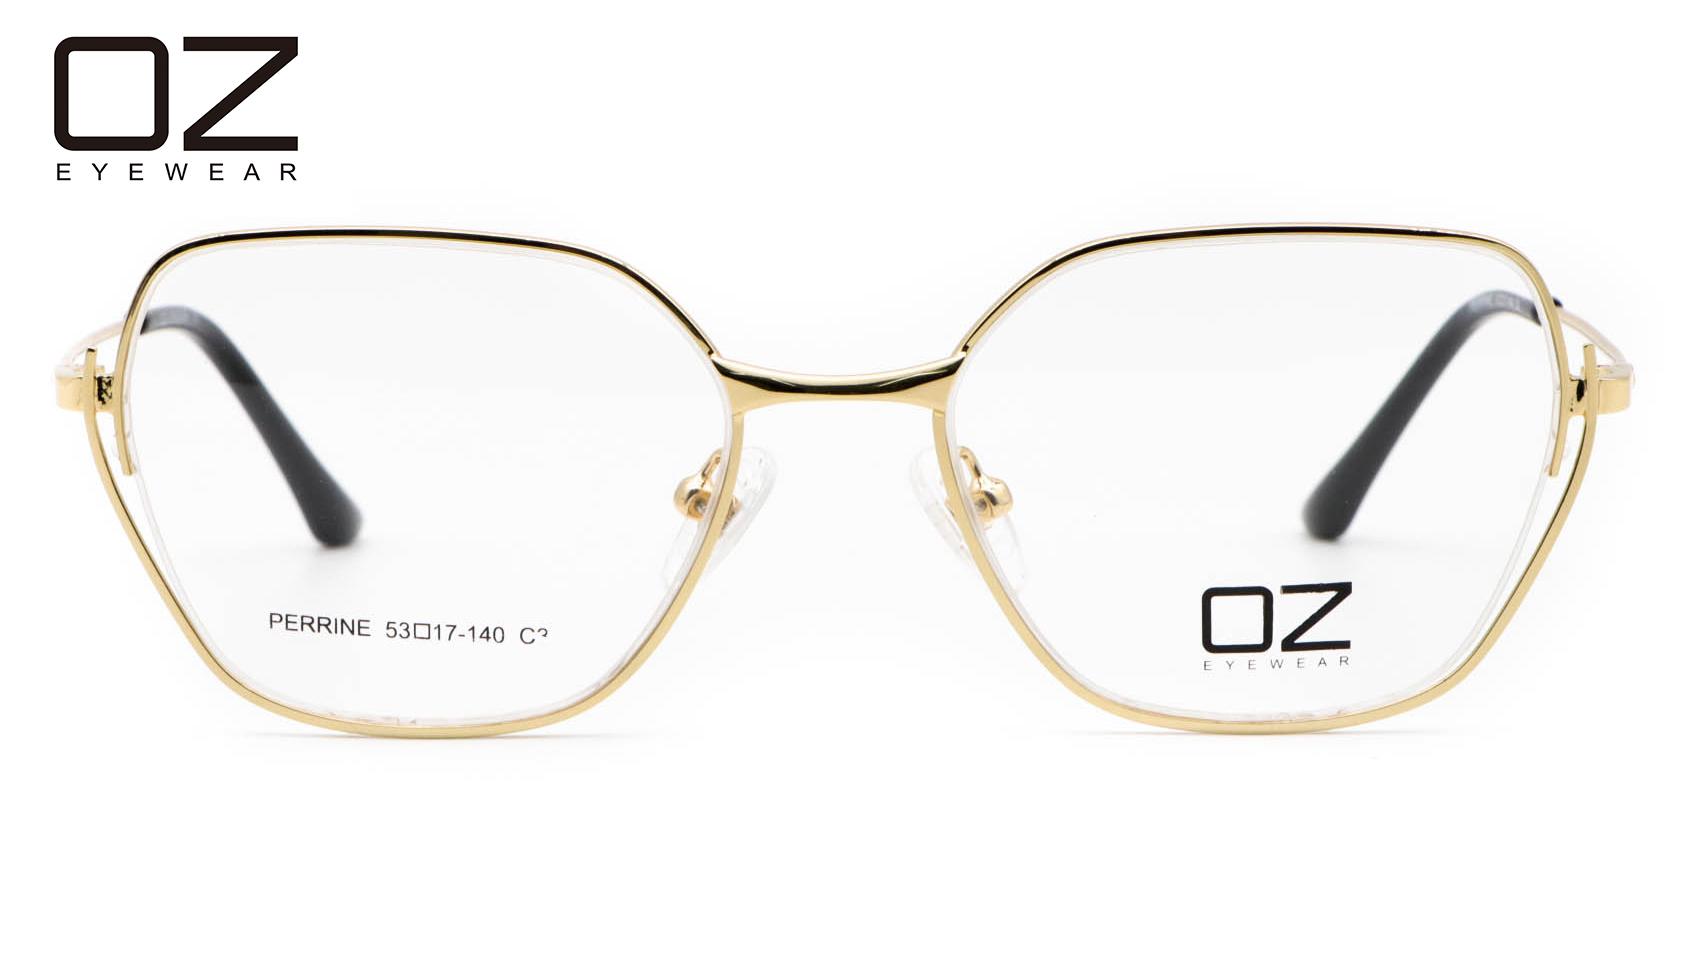 Oz Eyewear PERRINE C3